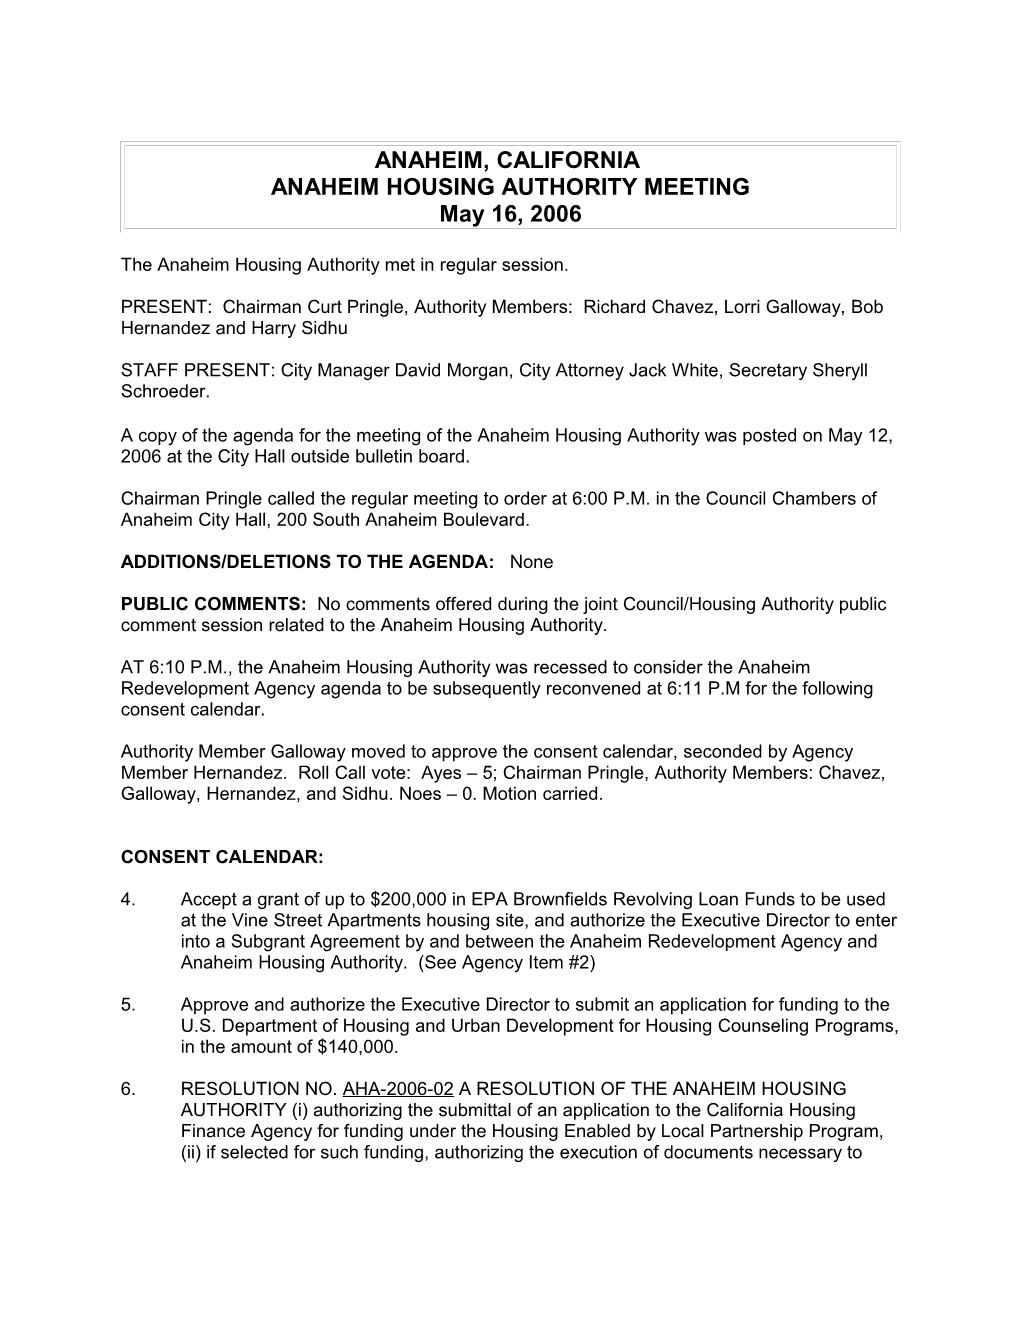 Anaheim Housing Authority Meeting